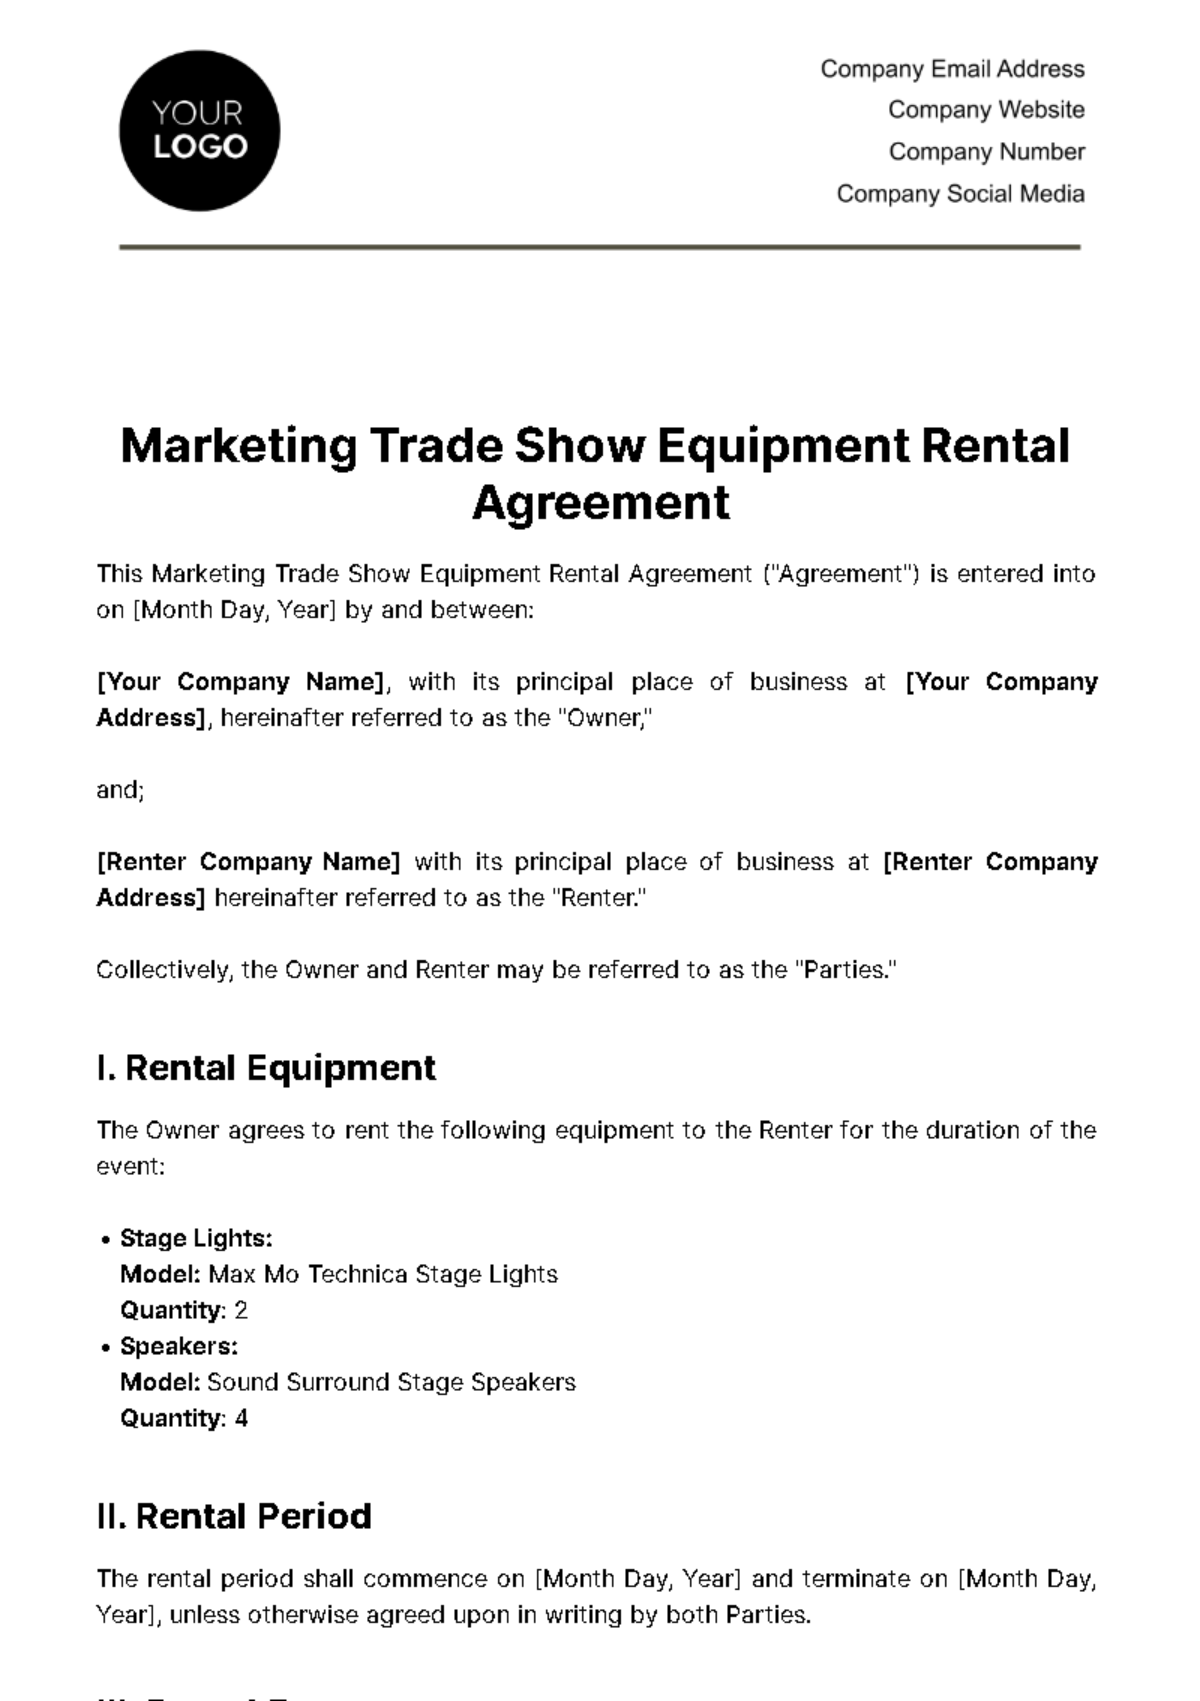 Marketing Trade Show Equipment Rental Agreement Template